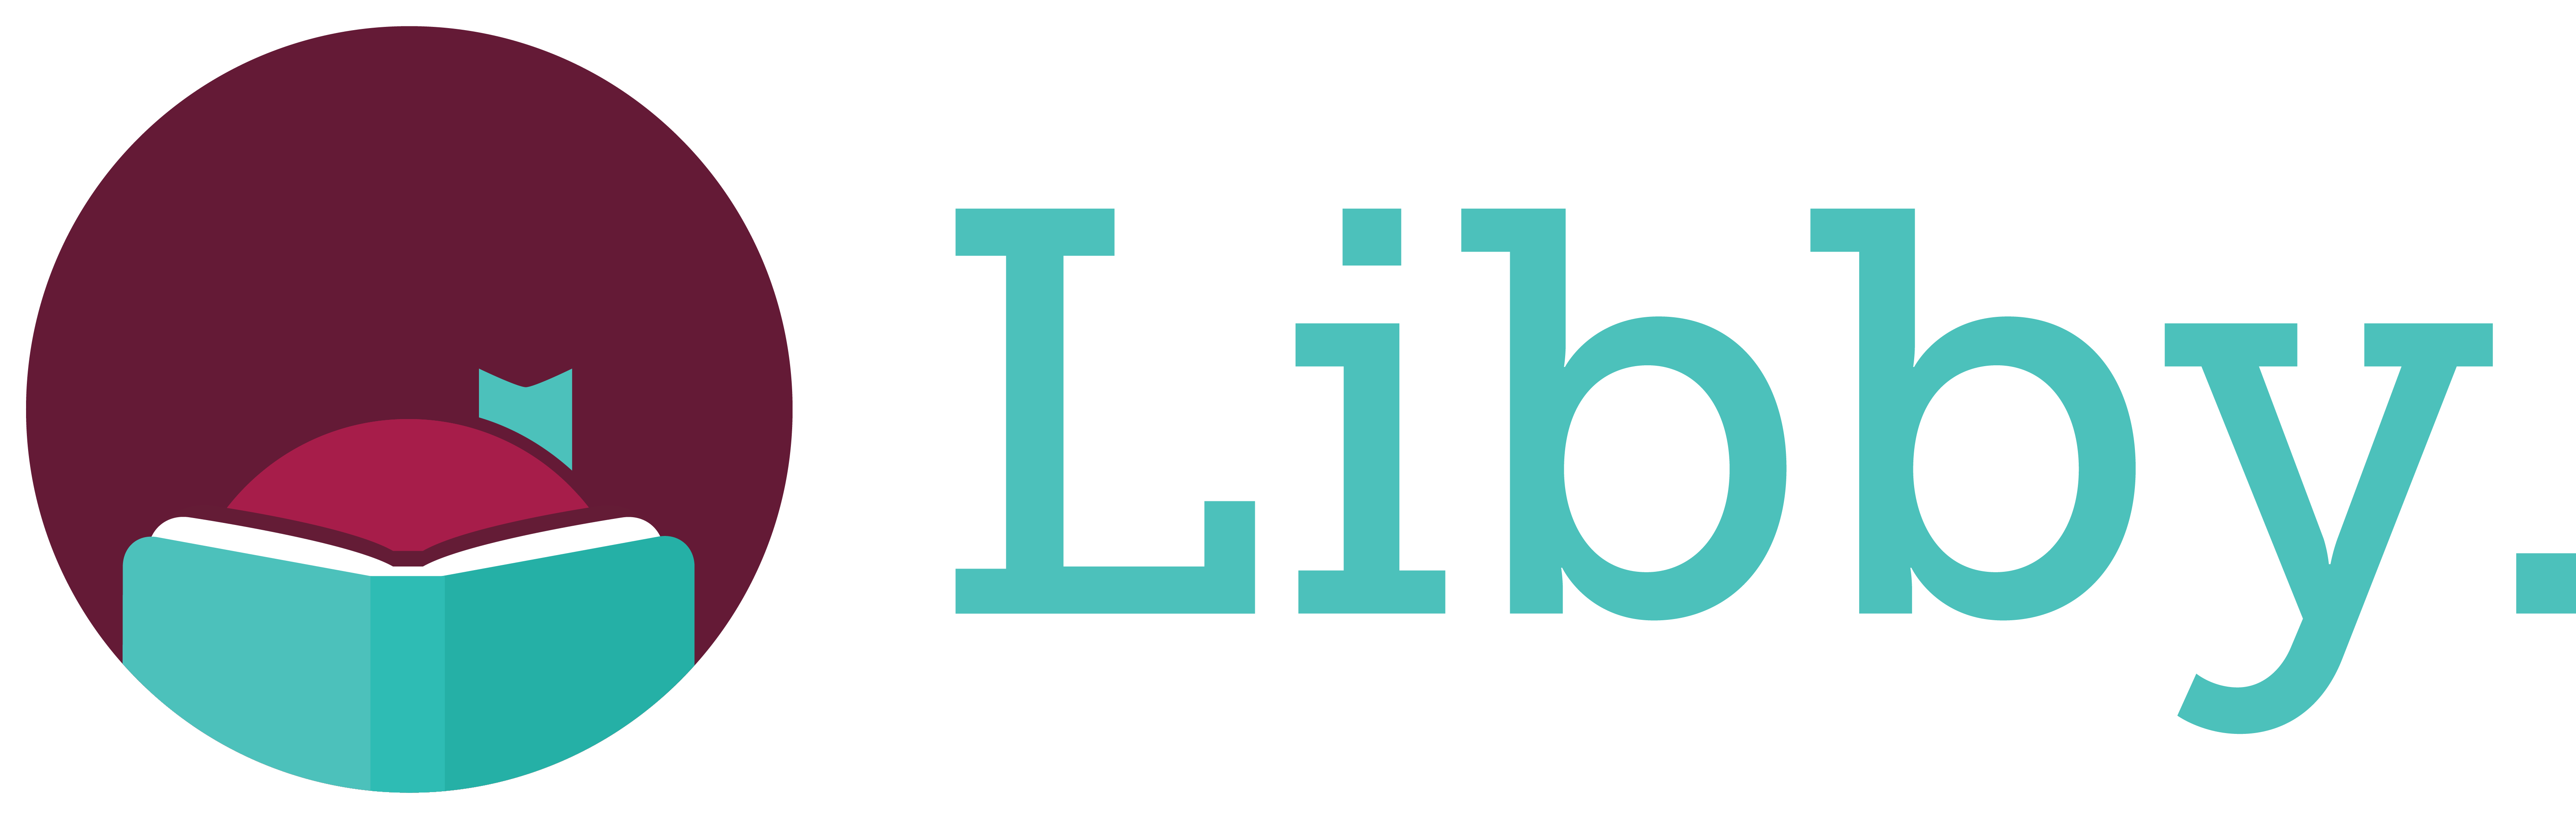 Link to digital resources platform, Libby.